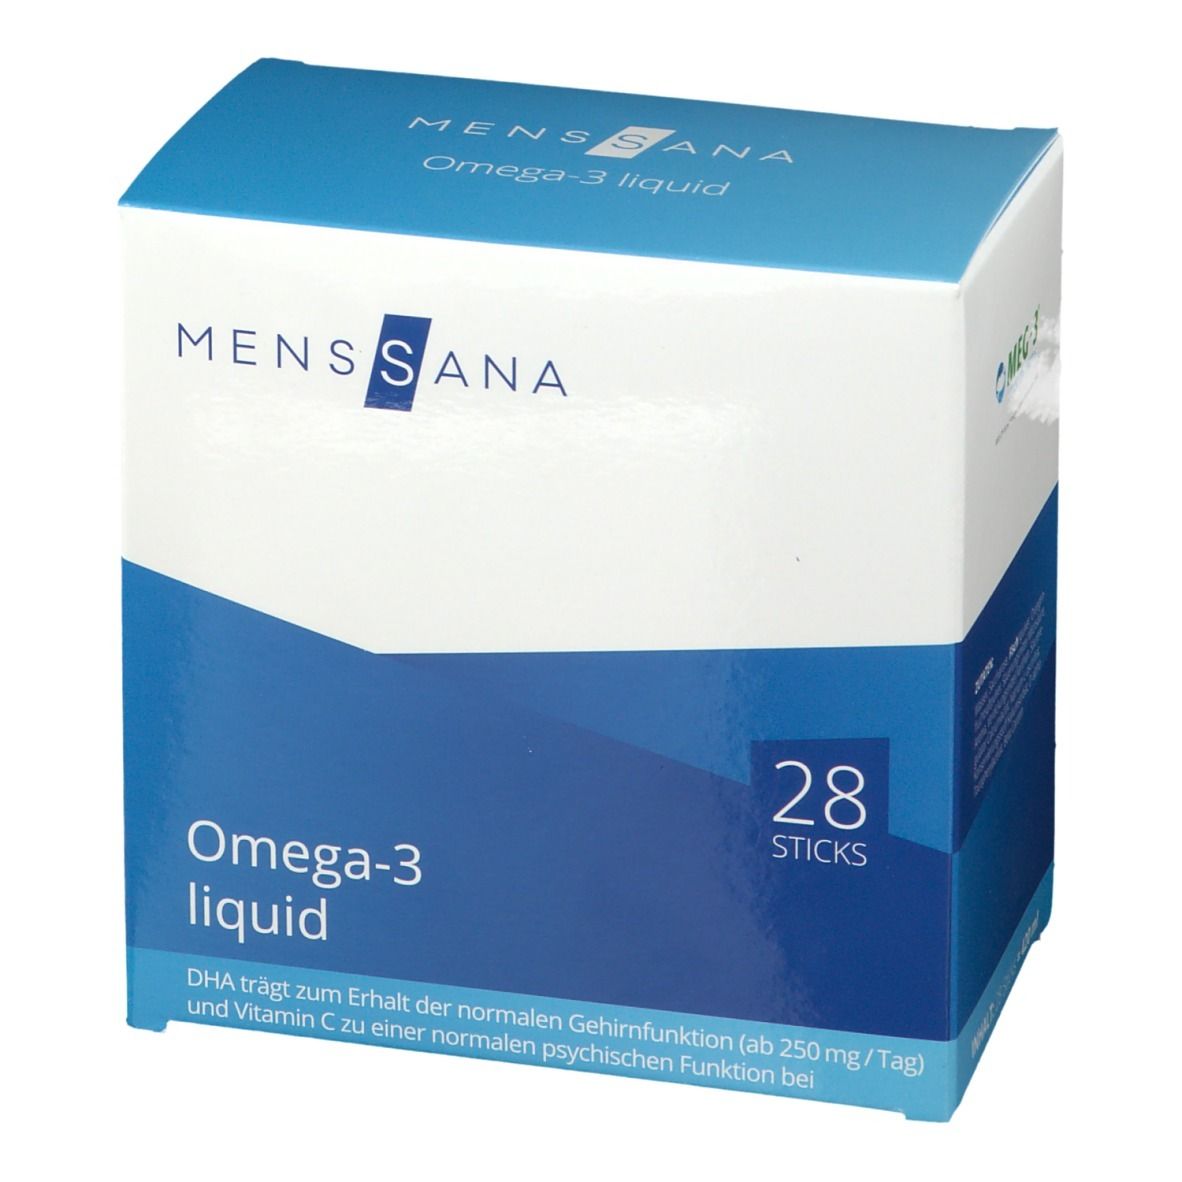 MensSana Omega-3 liquid